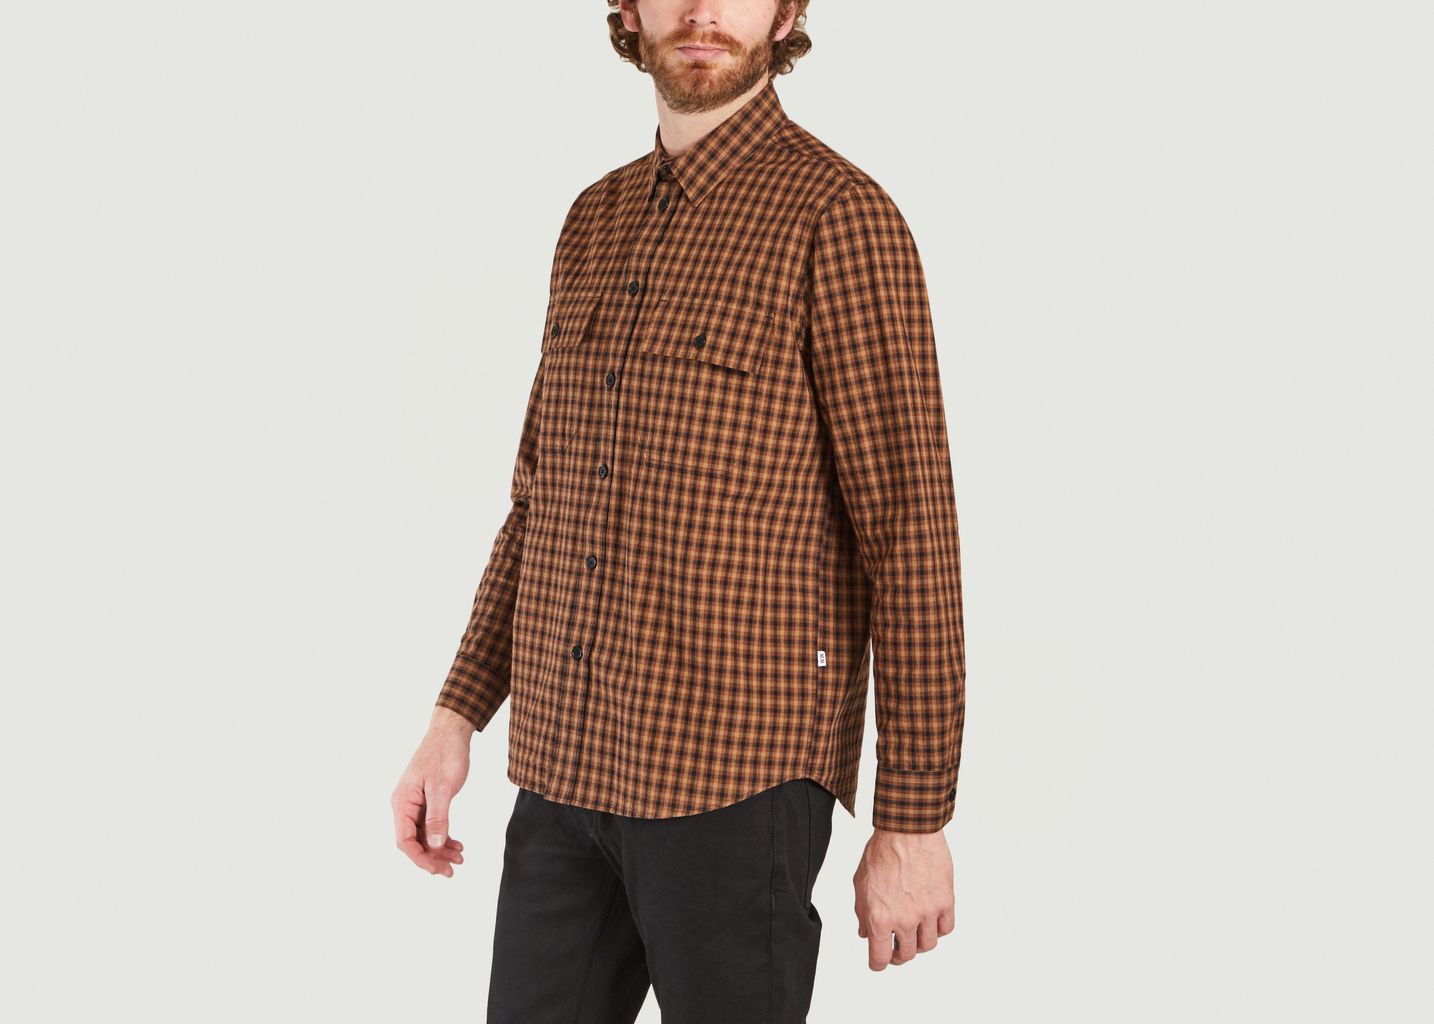 Avenir flannel check shirt - Wood Wood